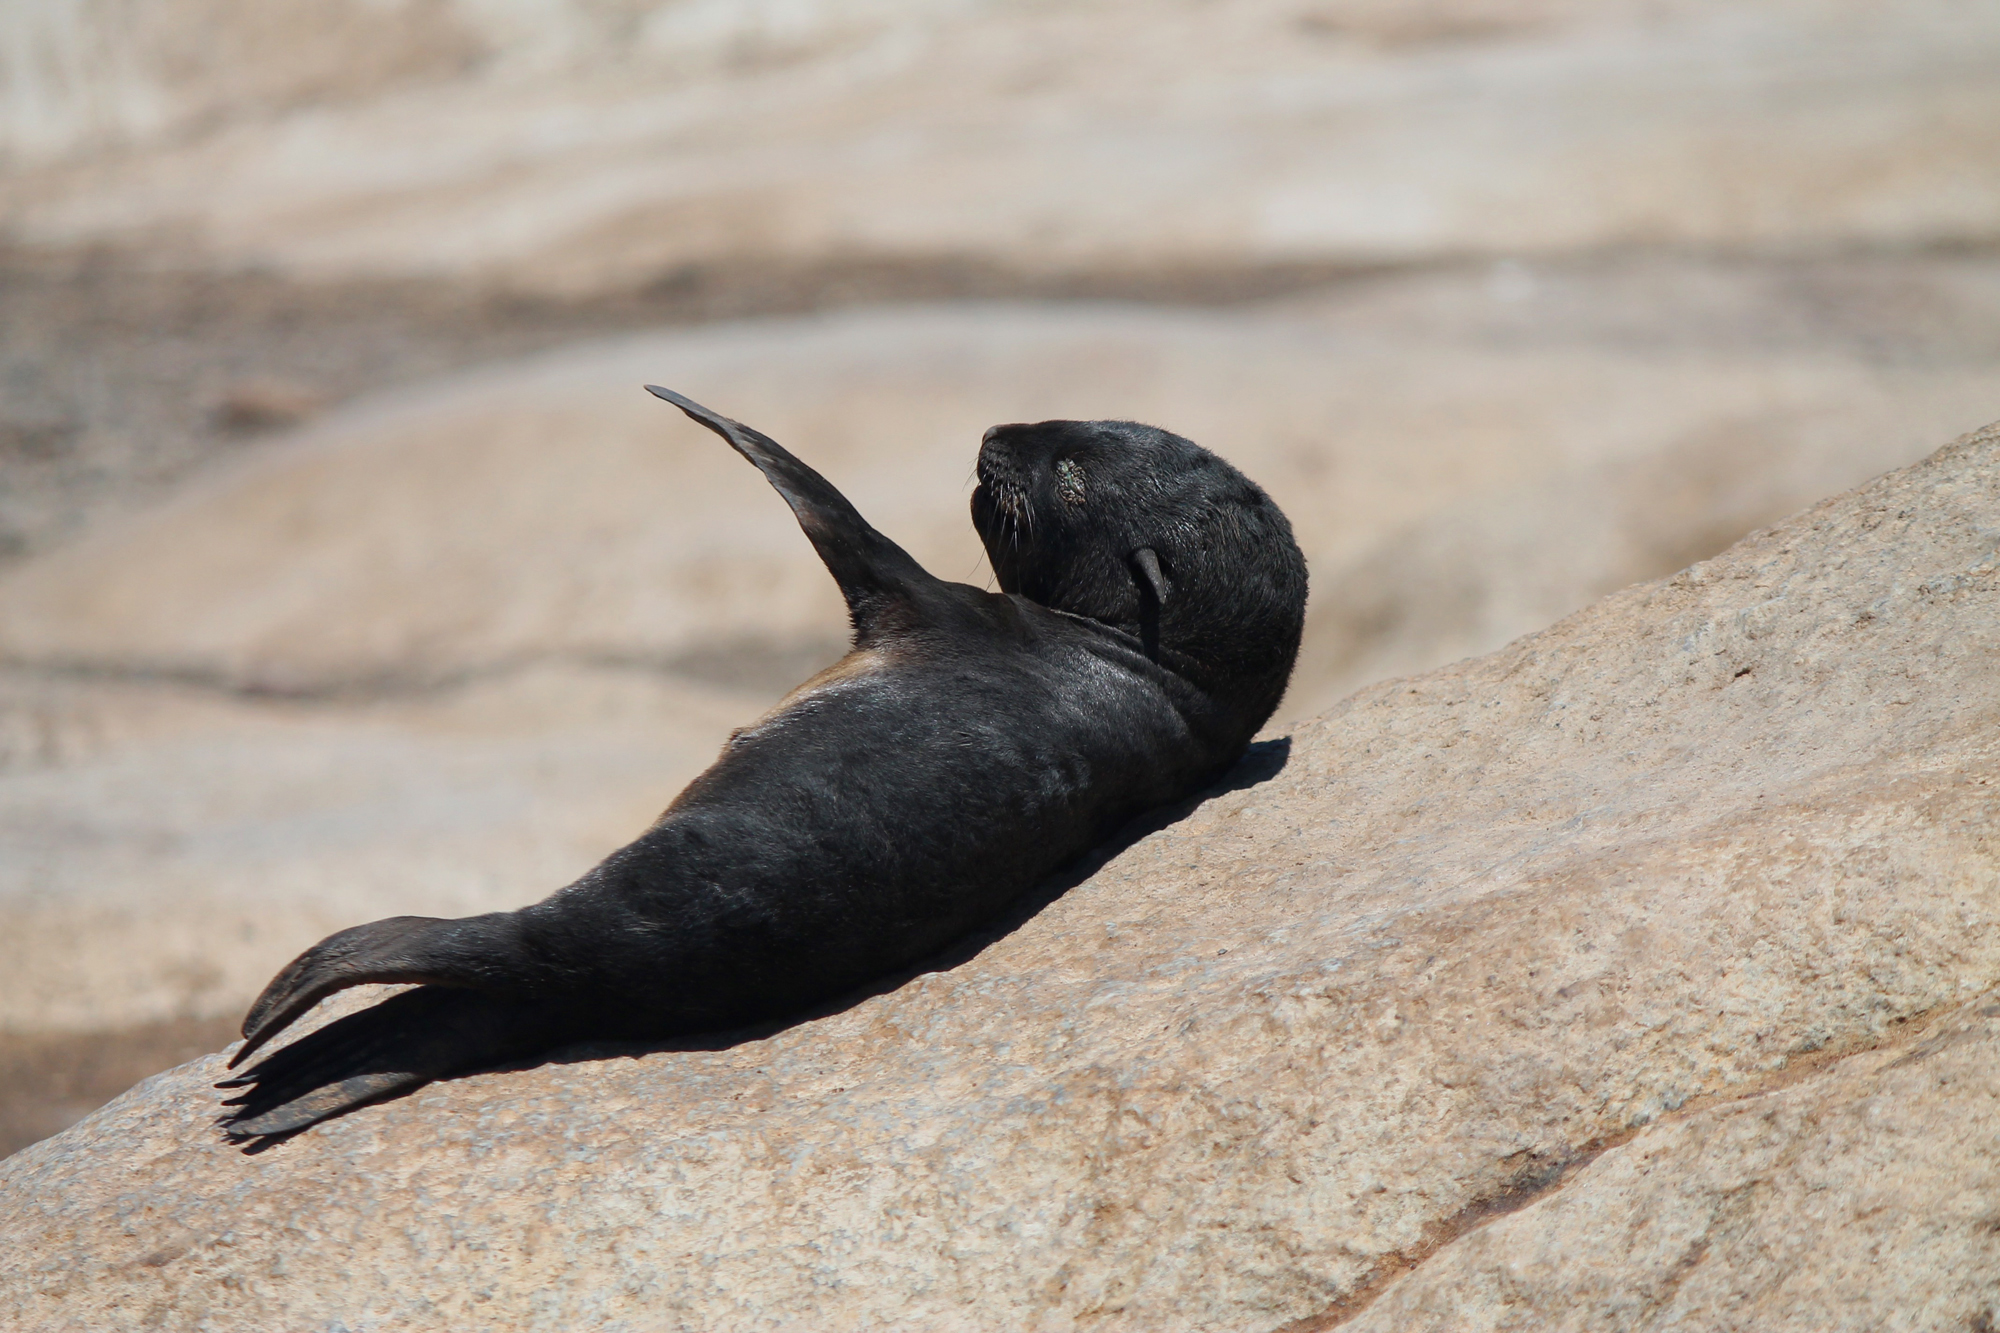  Newborn seal left alone is in danger 